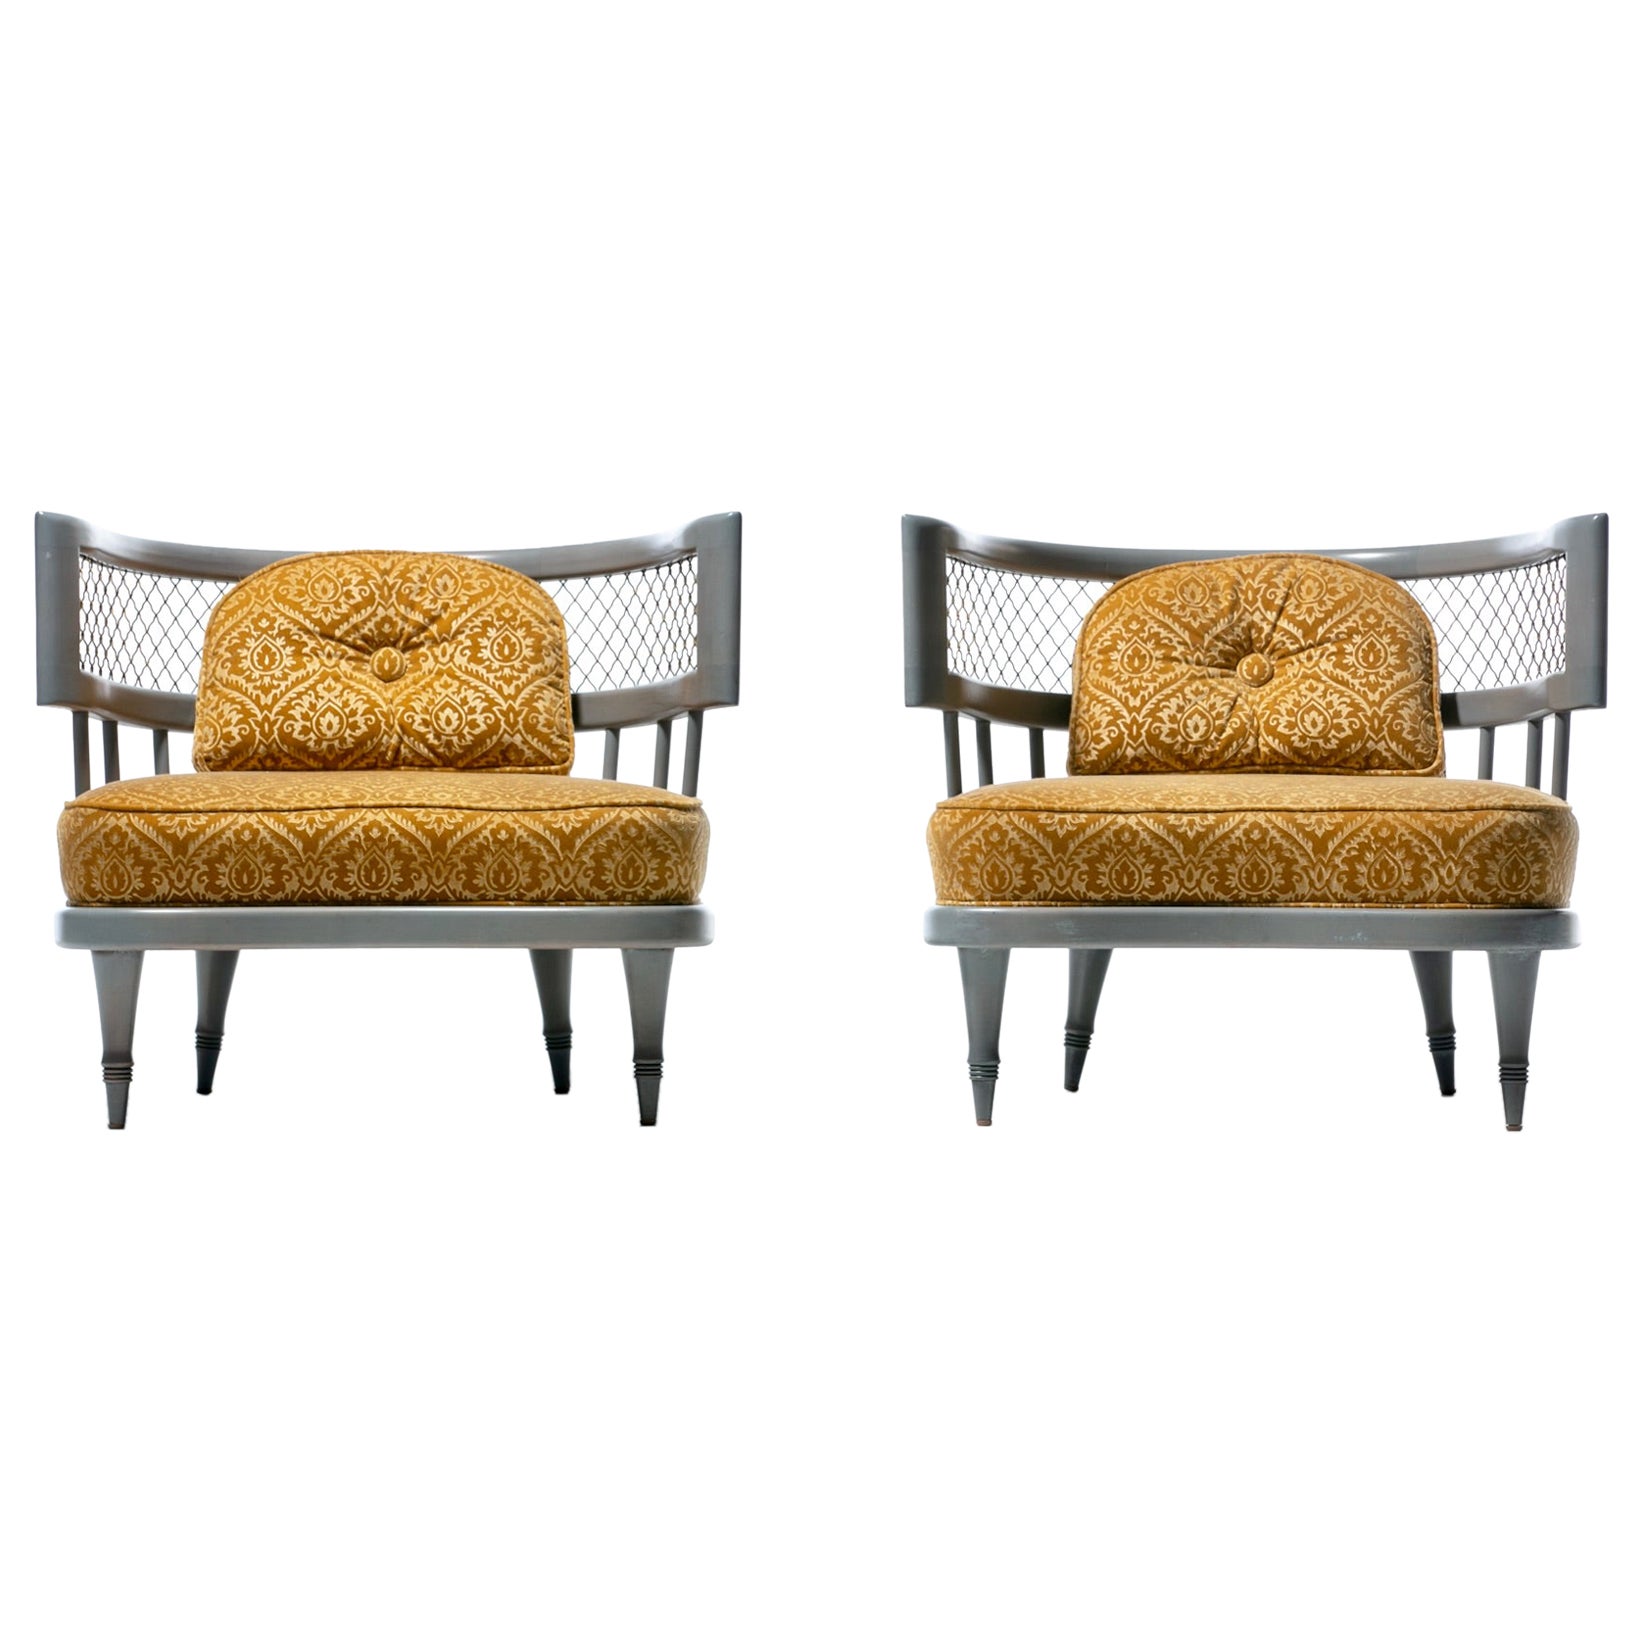 Hollywood Regency Slipper Chairs of Walnut and Brass in Italian Cut Velvet For Sale